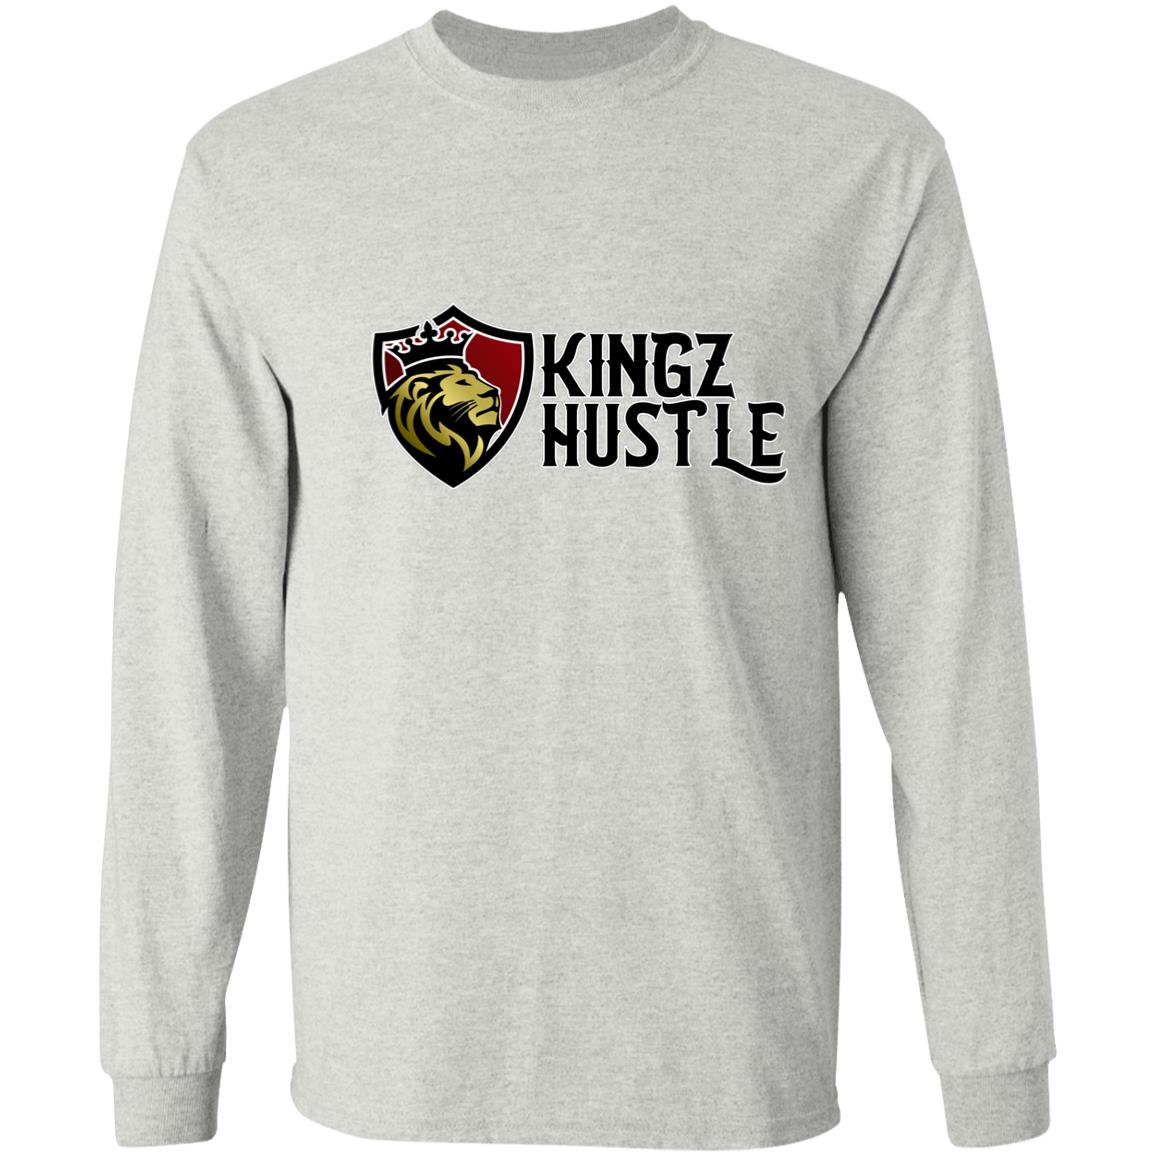 Kingz Hustle LS T-Shirt 5.3 oz.